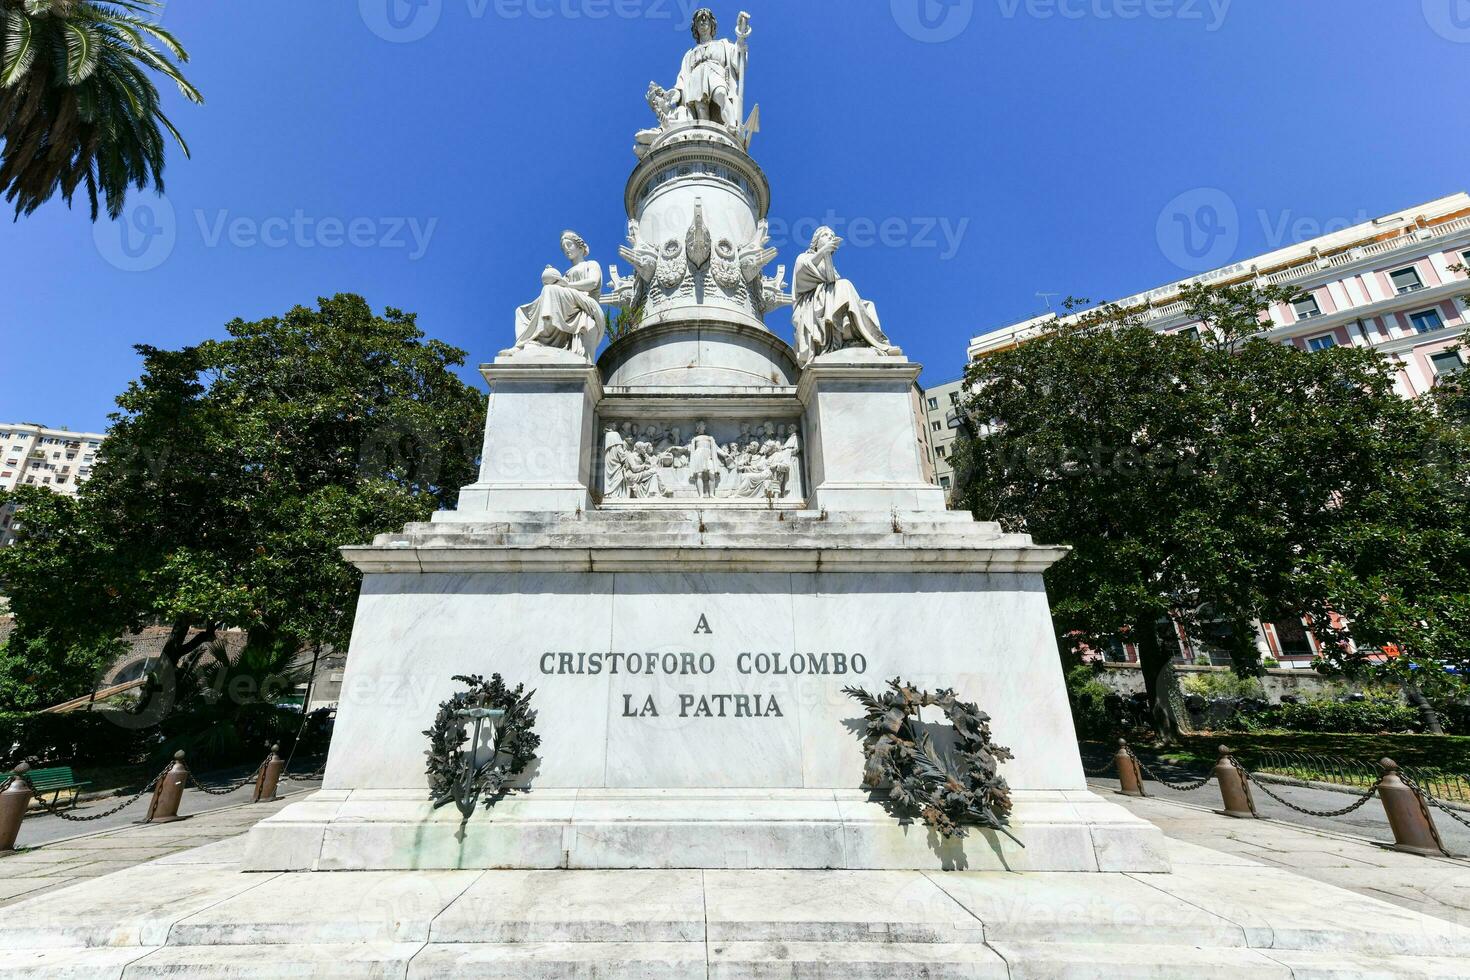 Cristóvão Colombo monumento - Génova, Itália foto